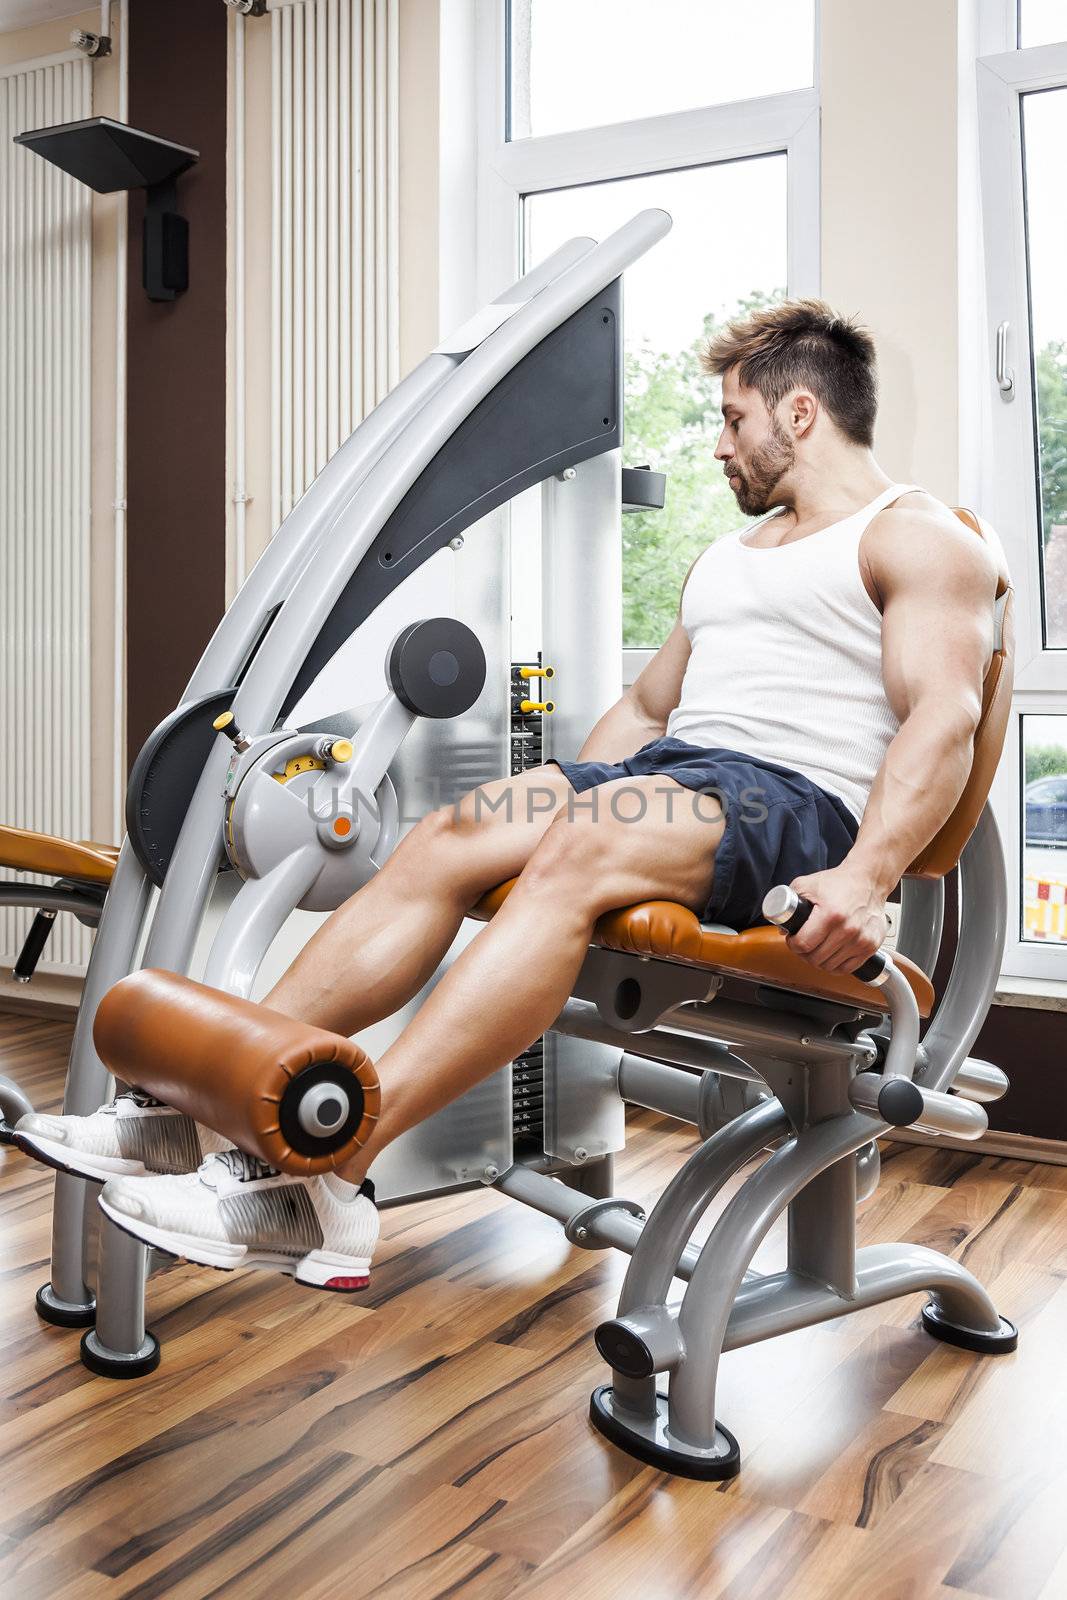 A handsome young muscular sports man doing leg press